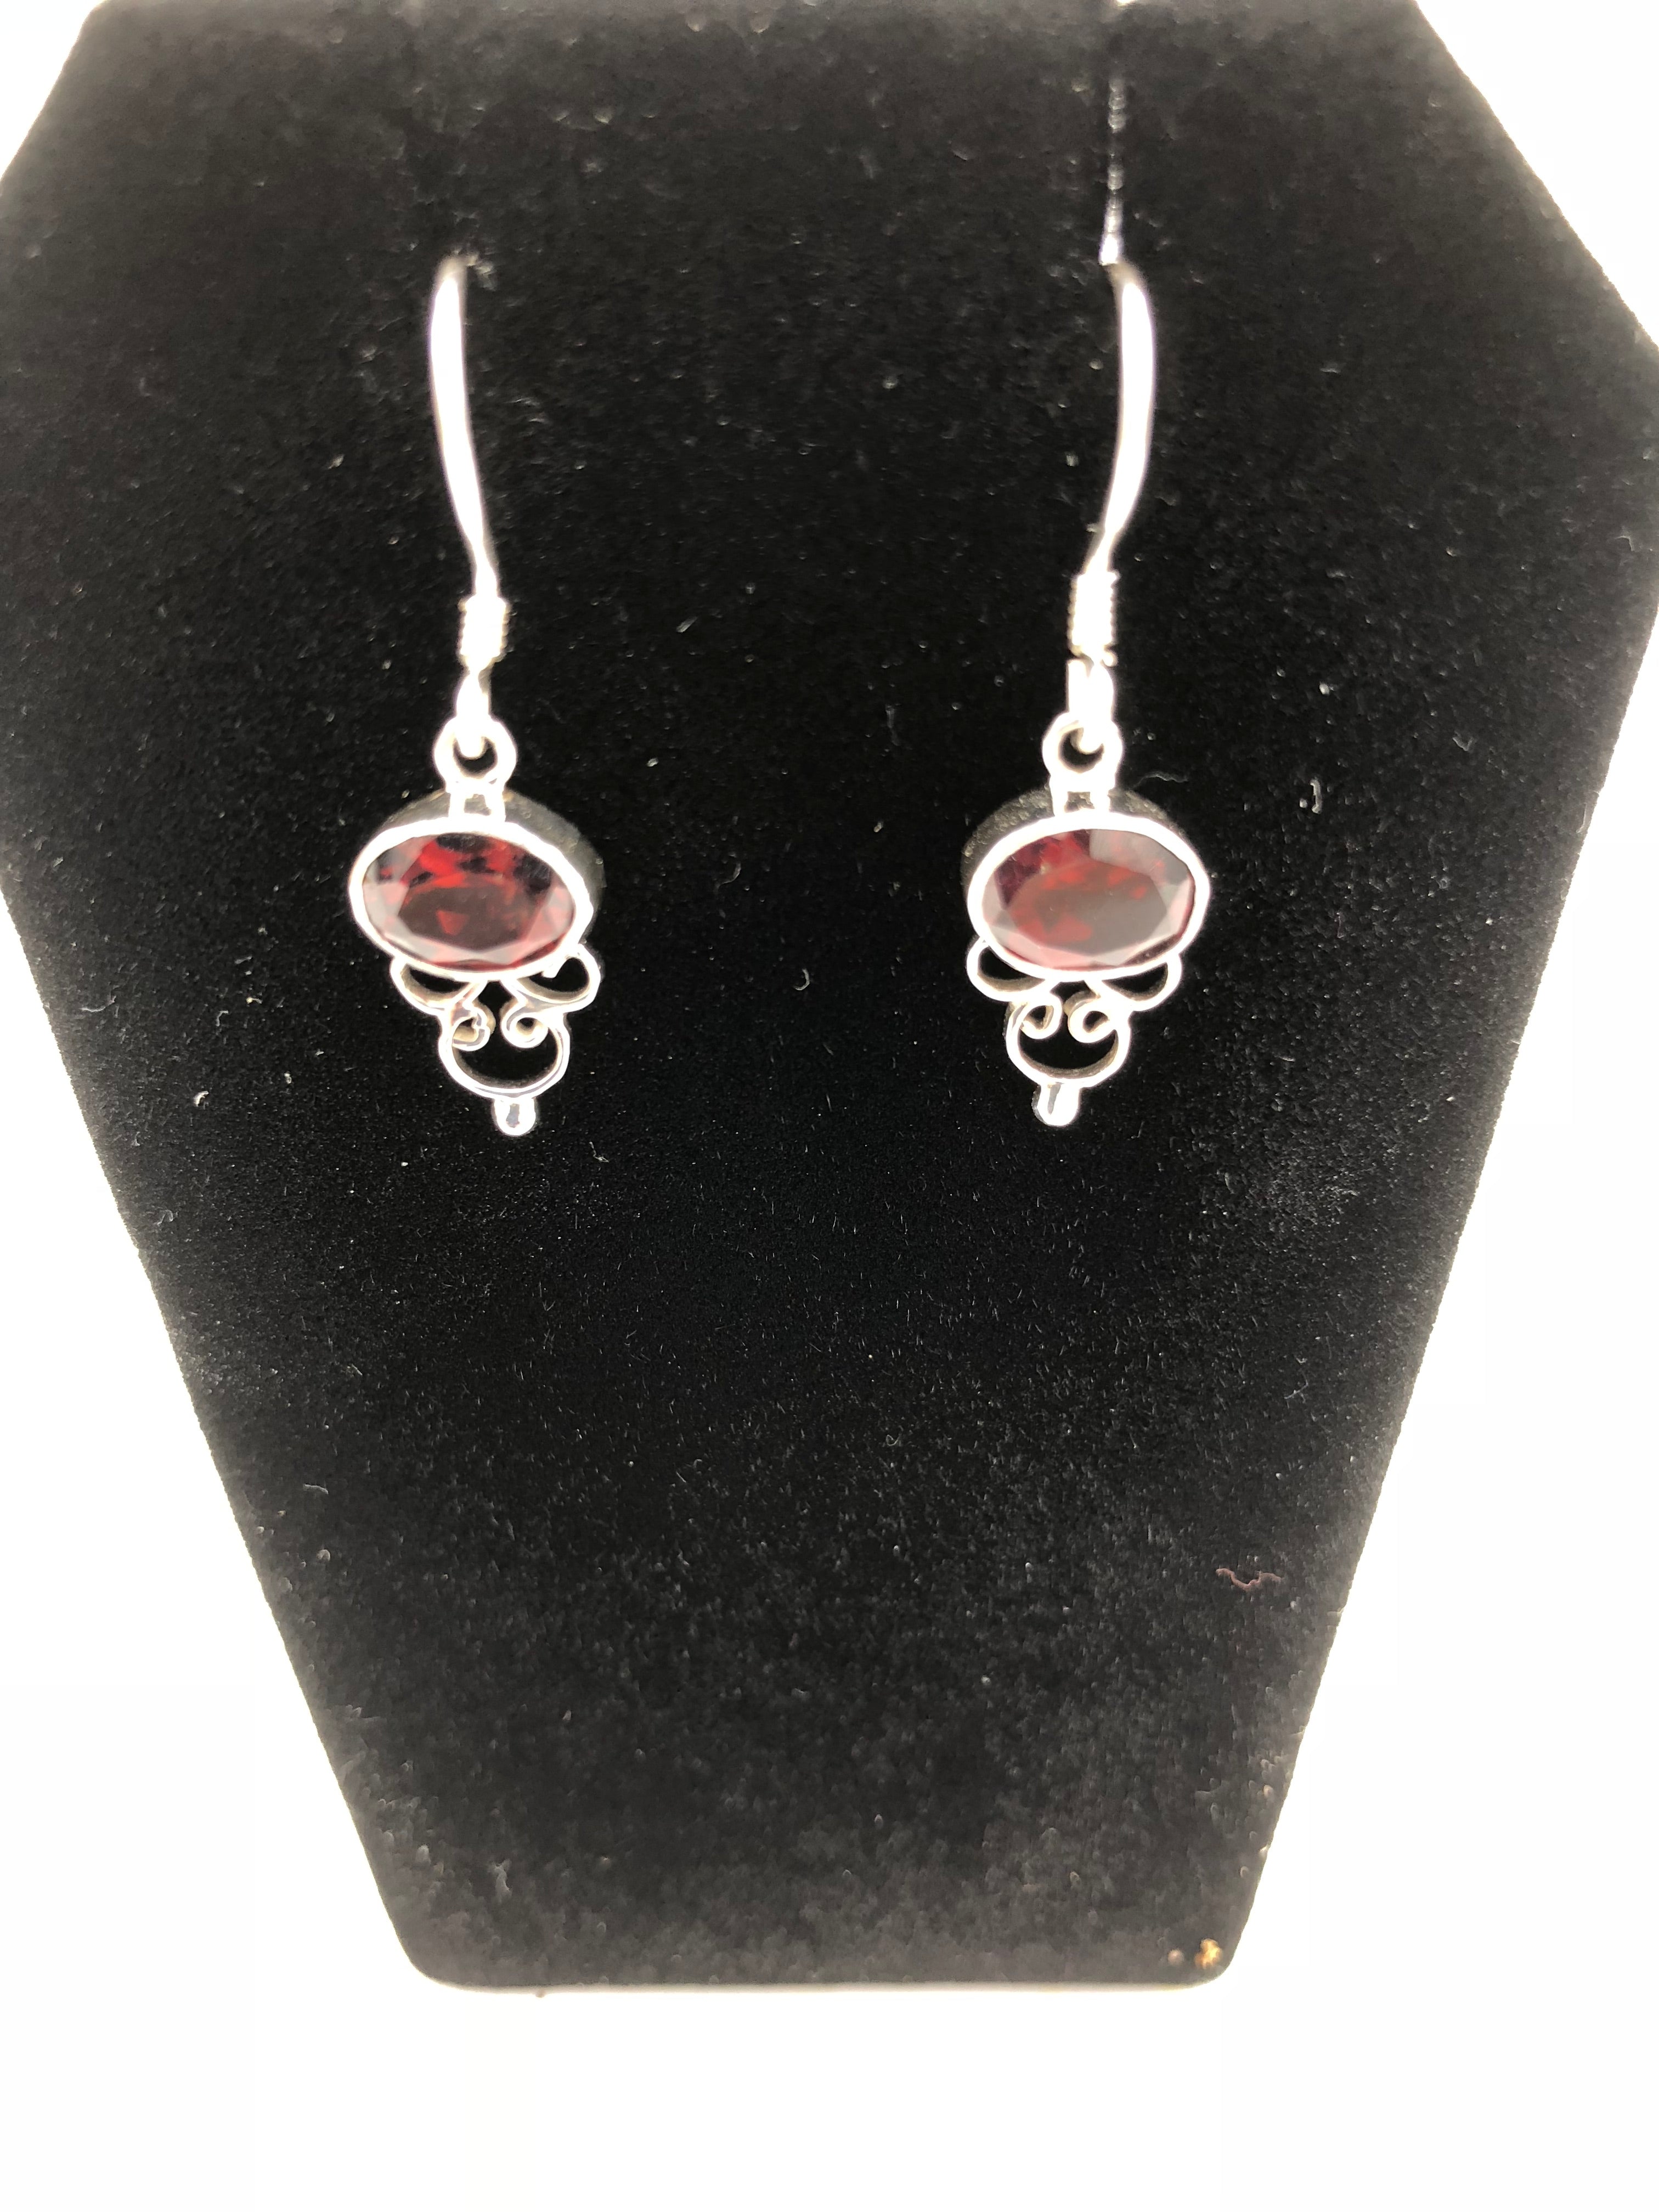 Sterling Silver drop earrings with stones (Labradorite,Lapis, Blue Quartz or Garnet)